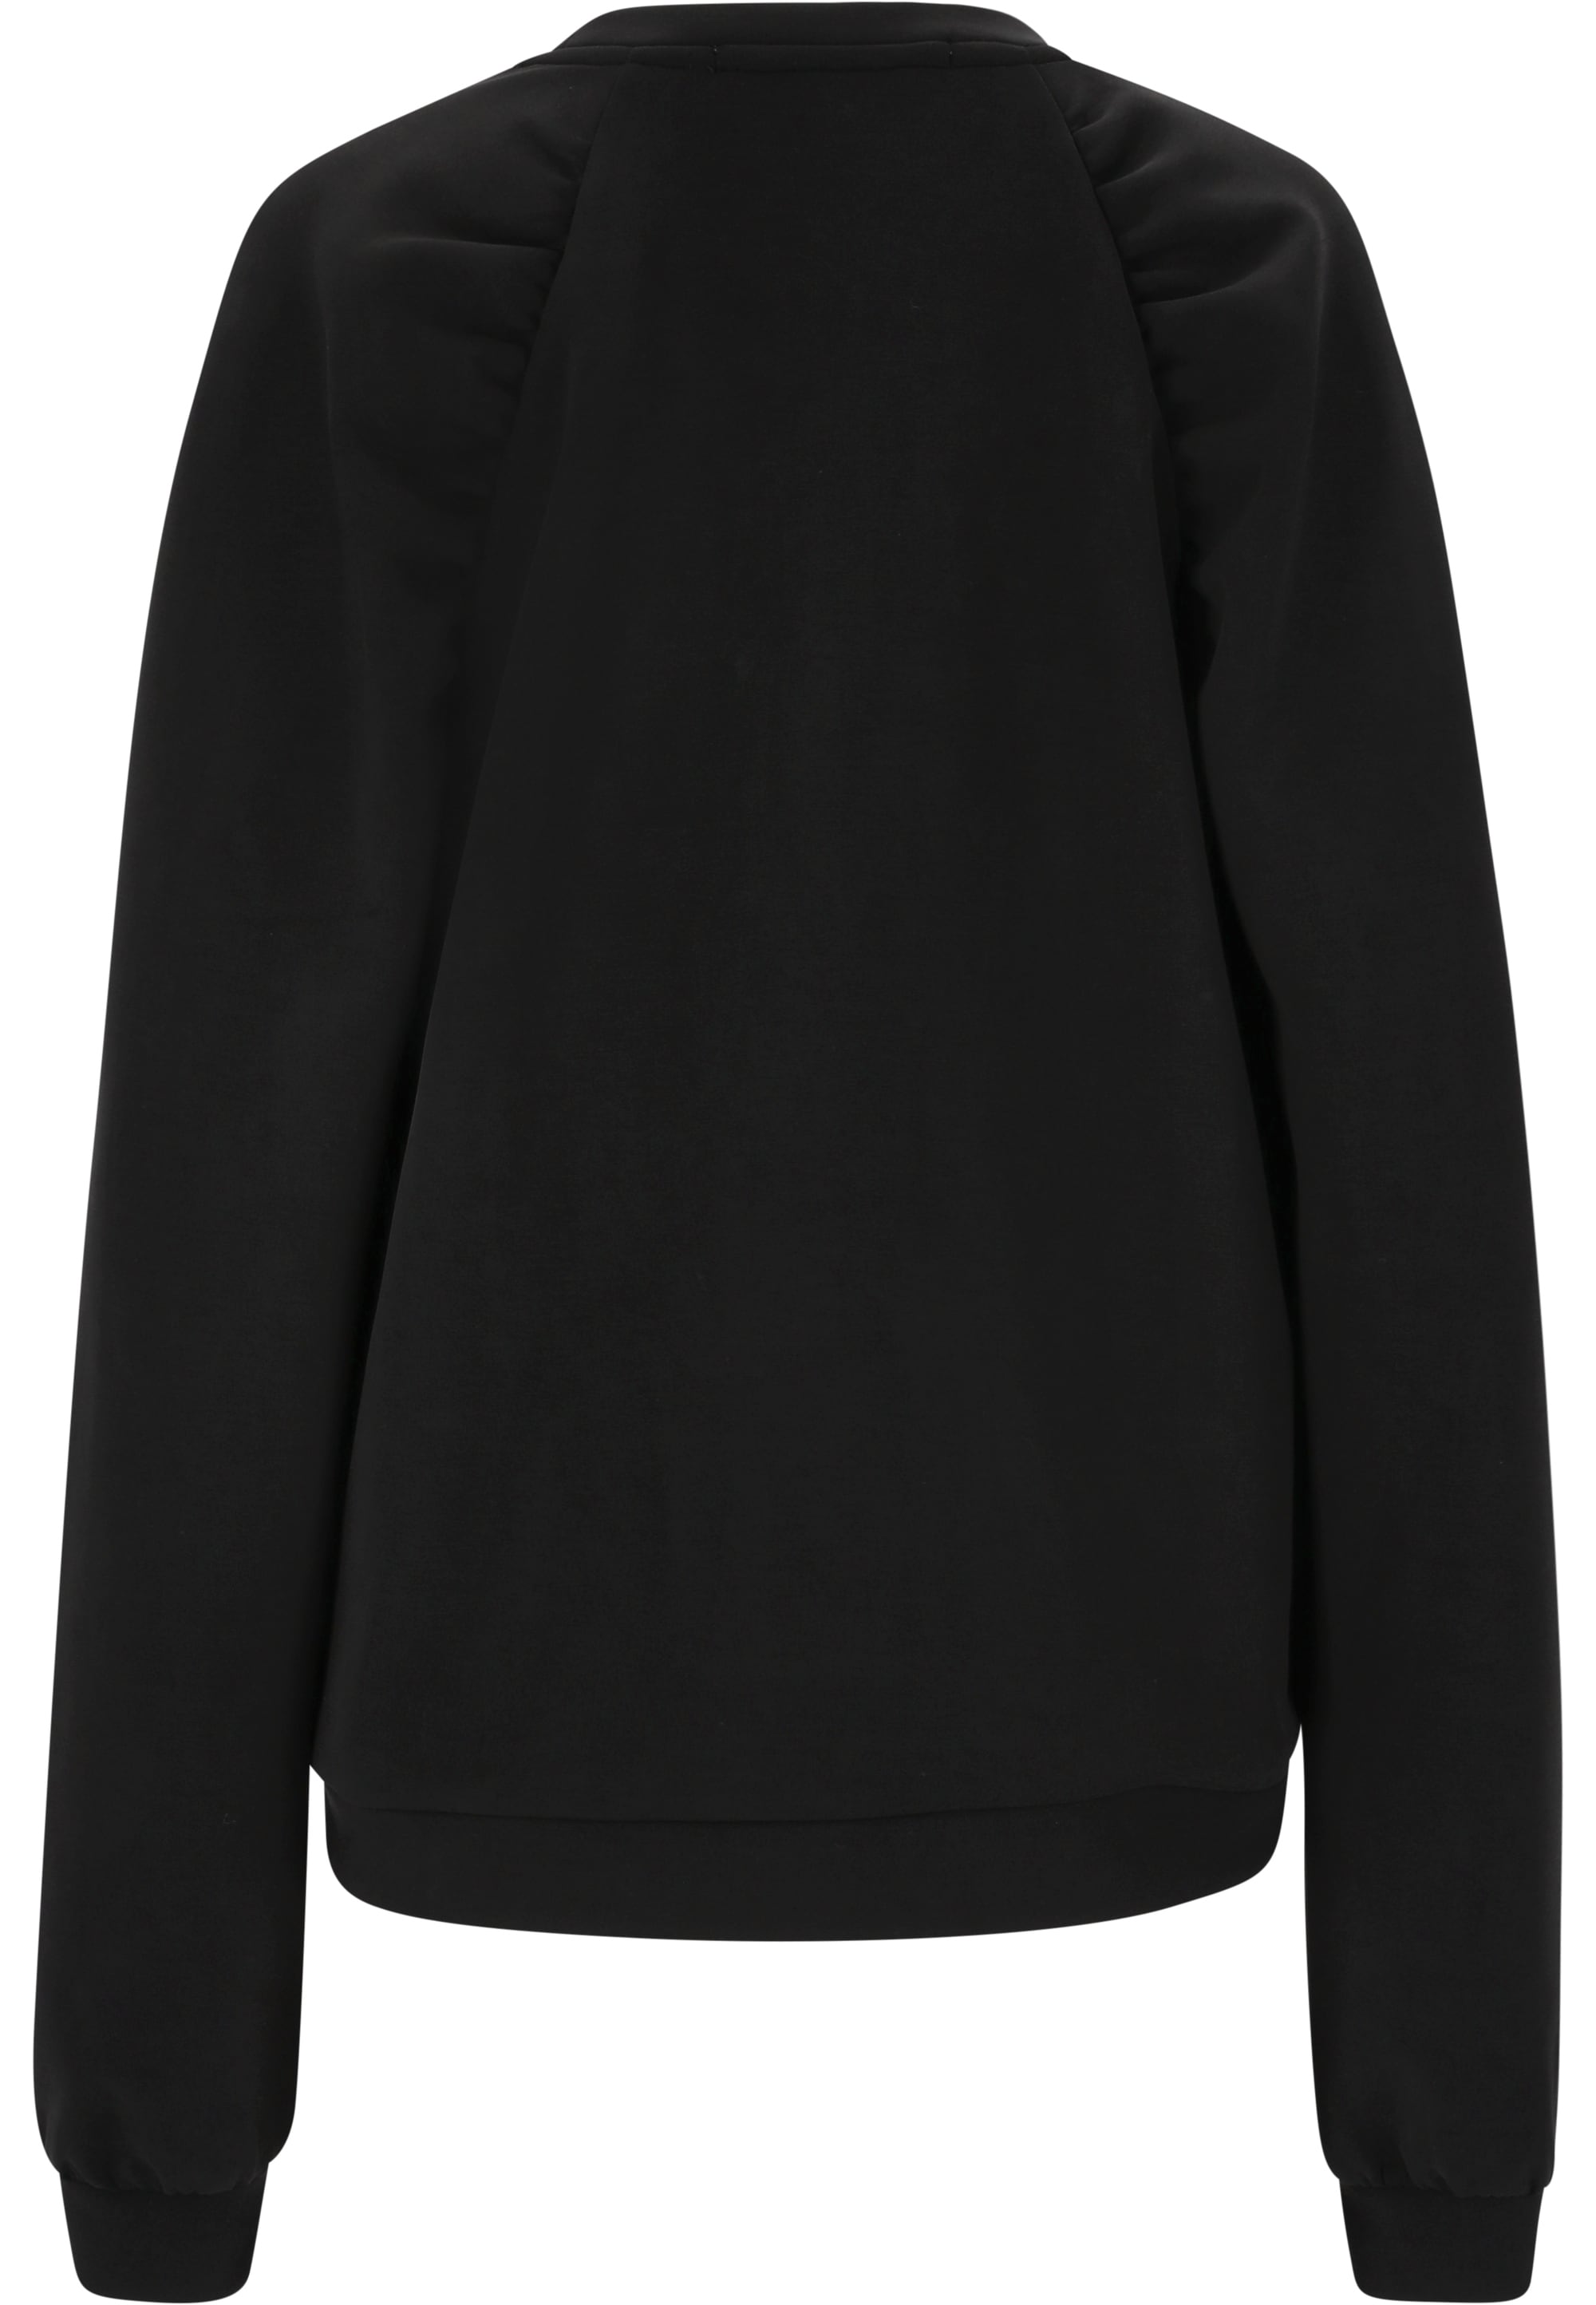 Sweatshirt in shoppen ATHLECIA »Jillnana«, schlichtem Design